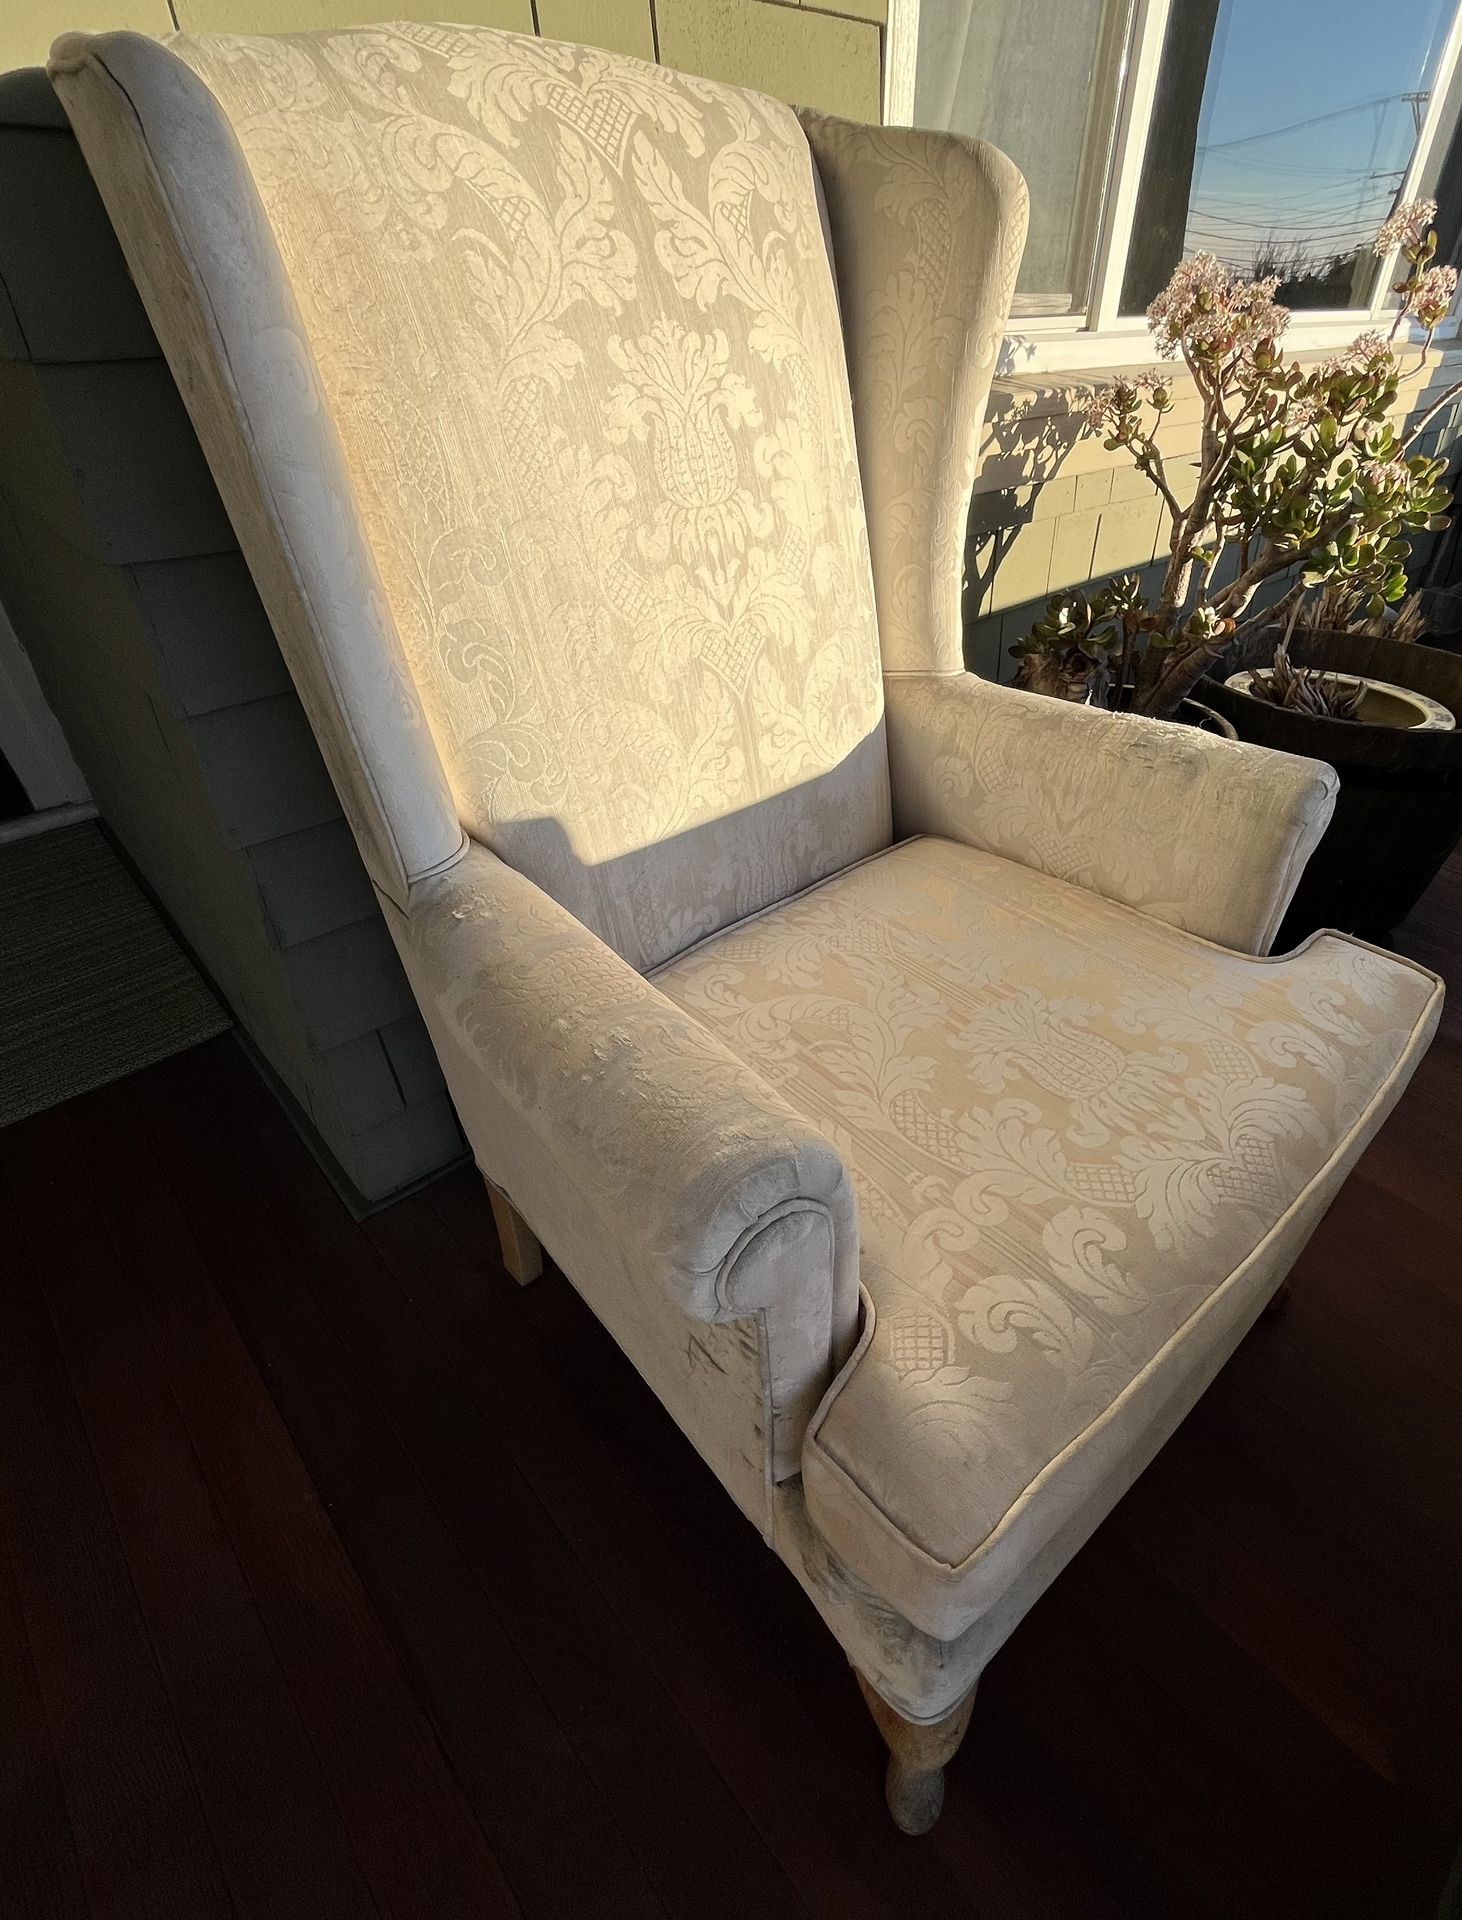 Queen Anne Chair -$20 OBO